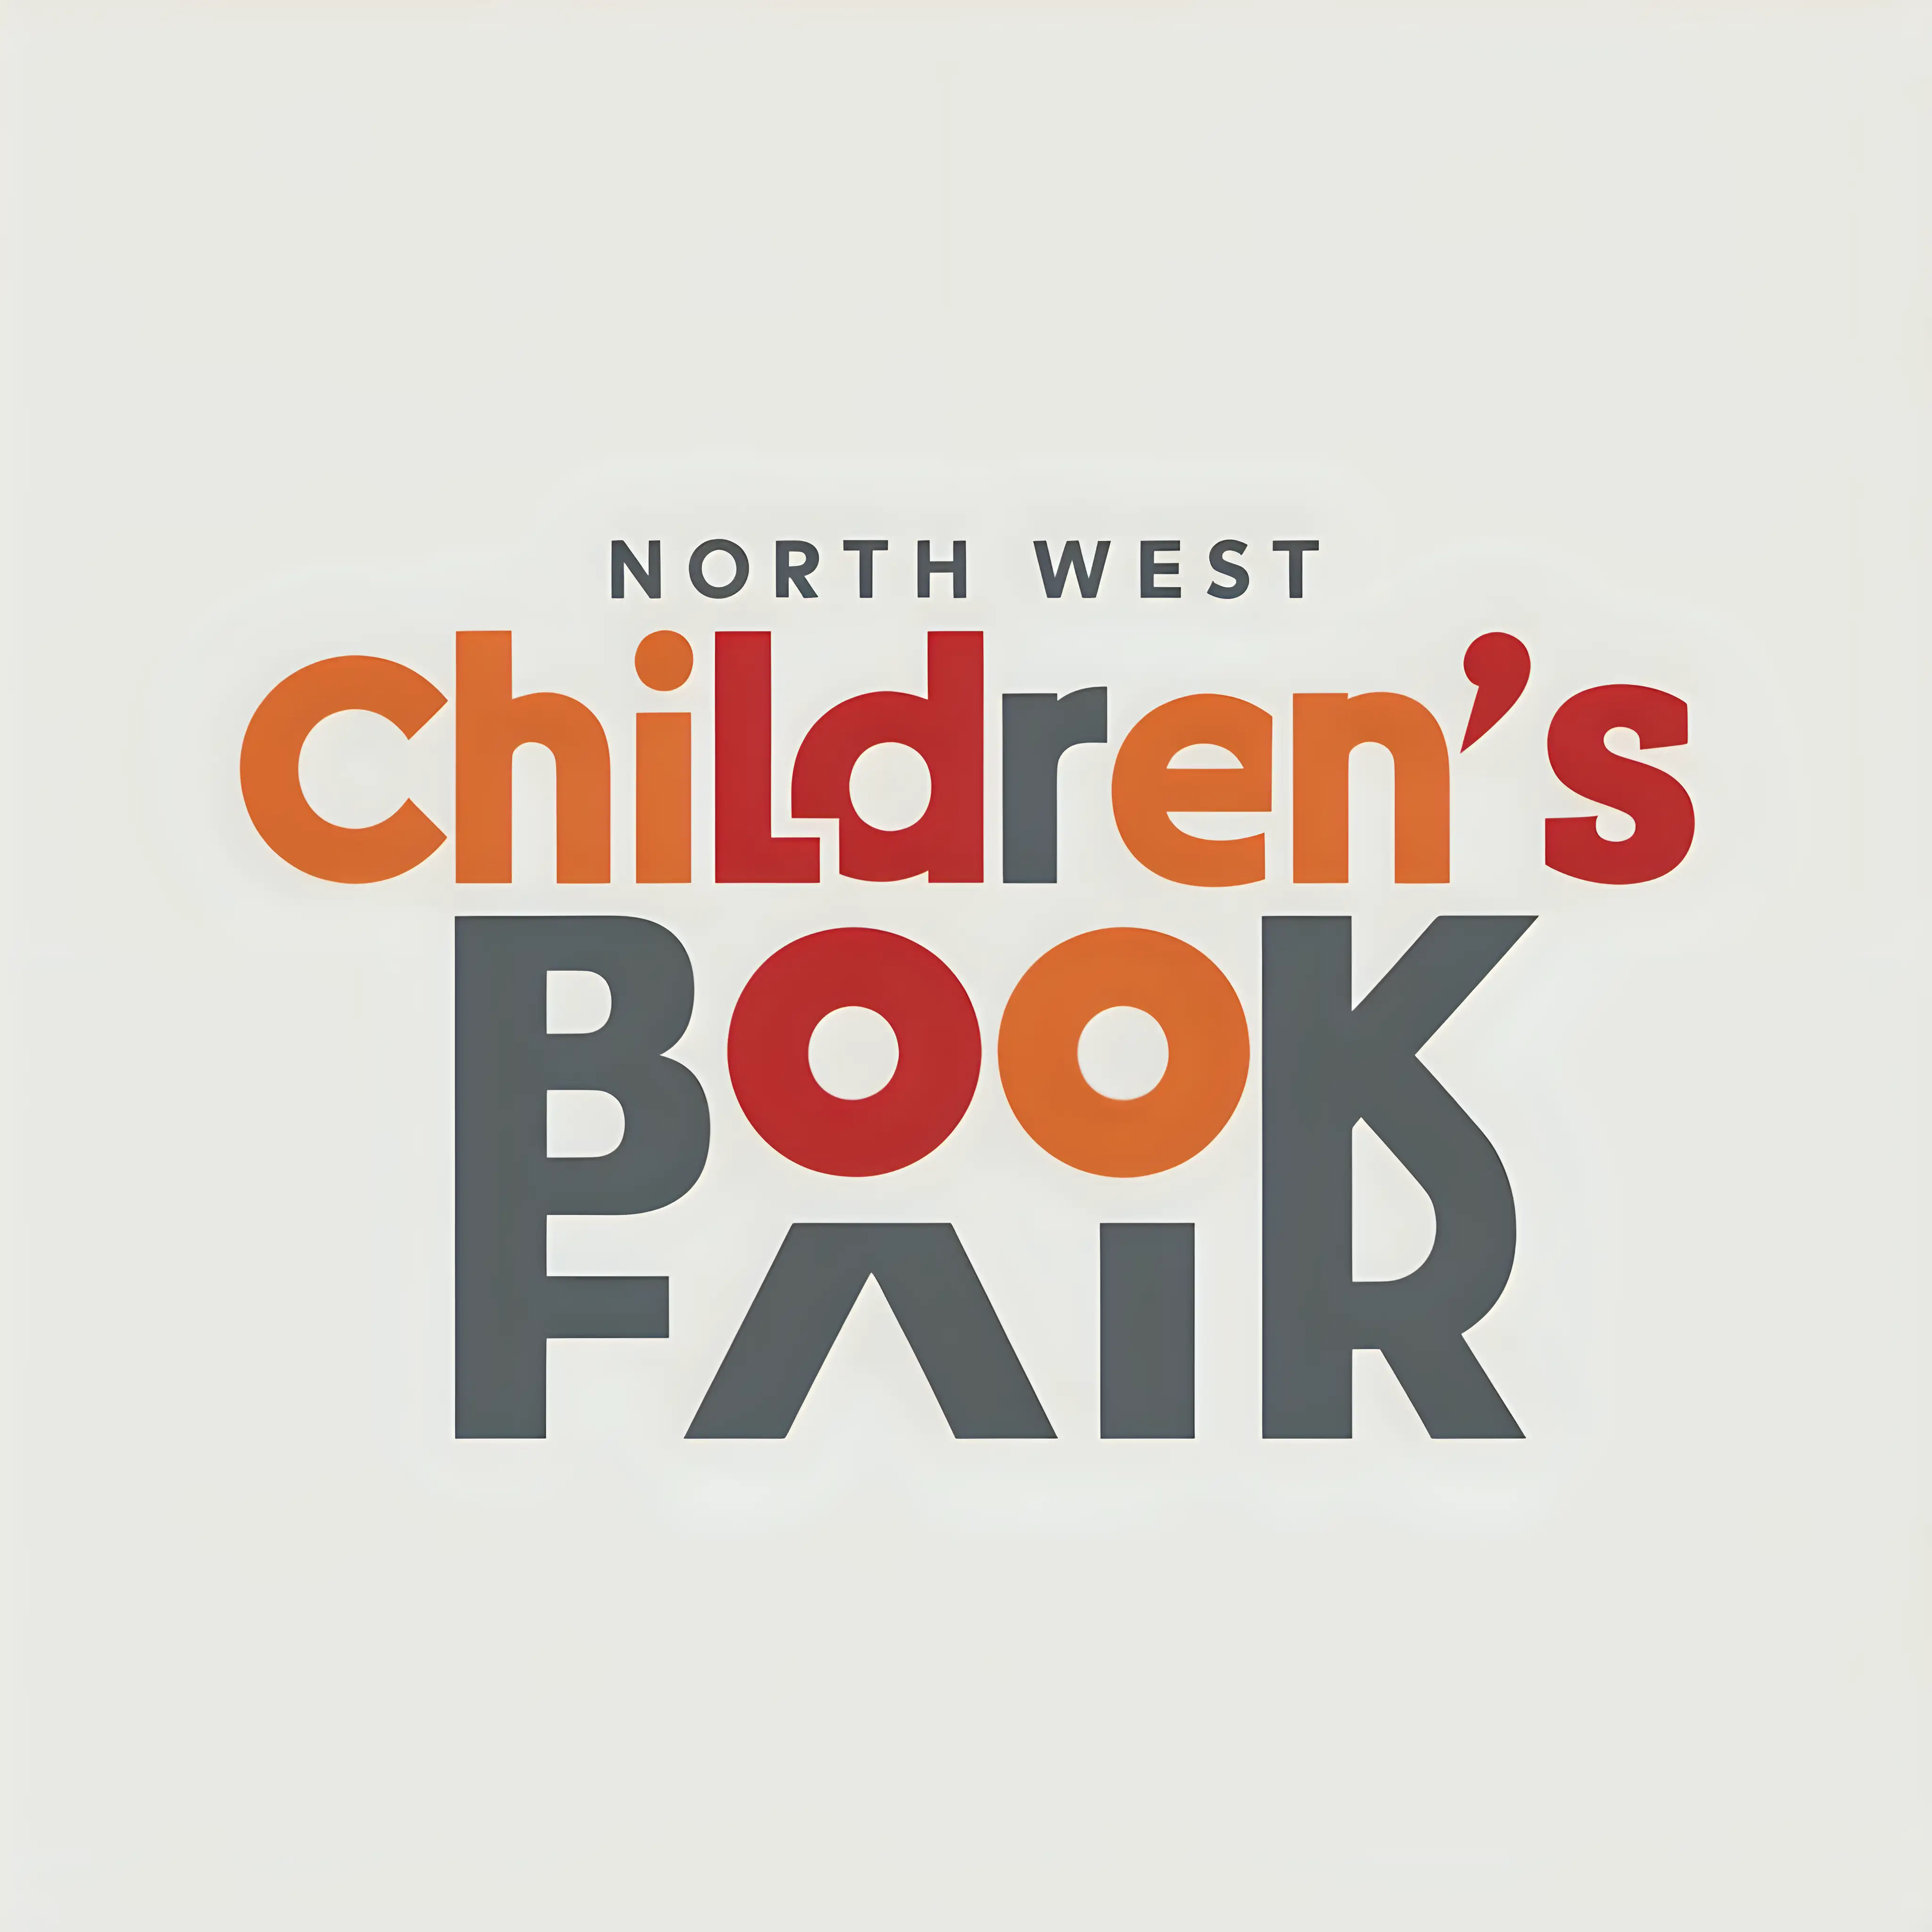 North West Childrens Book Fair Logo in Minimalistic Orange Red and Grey Tones